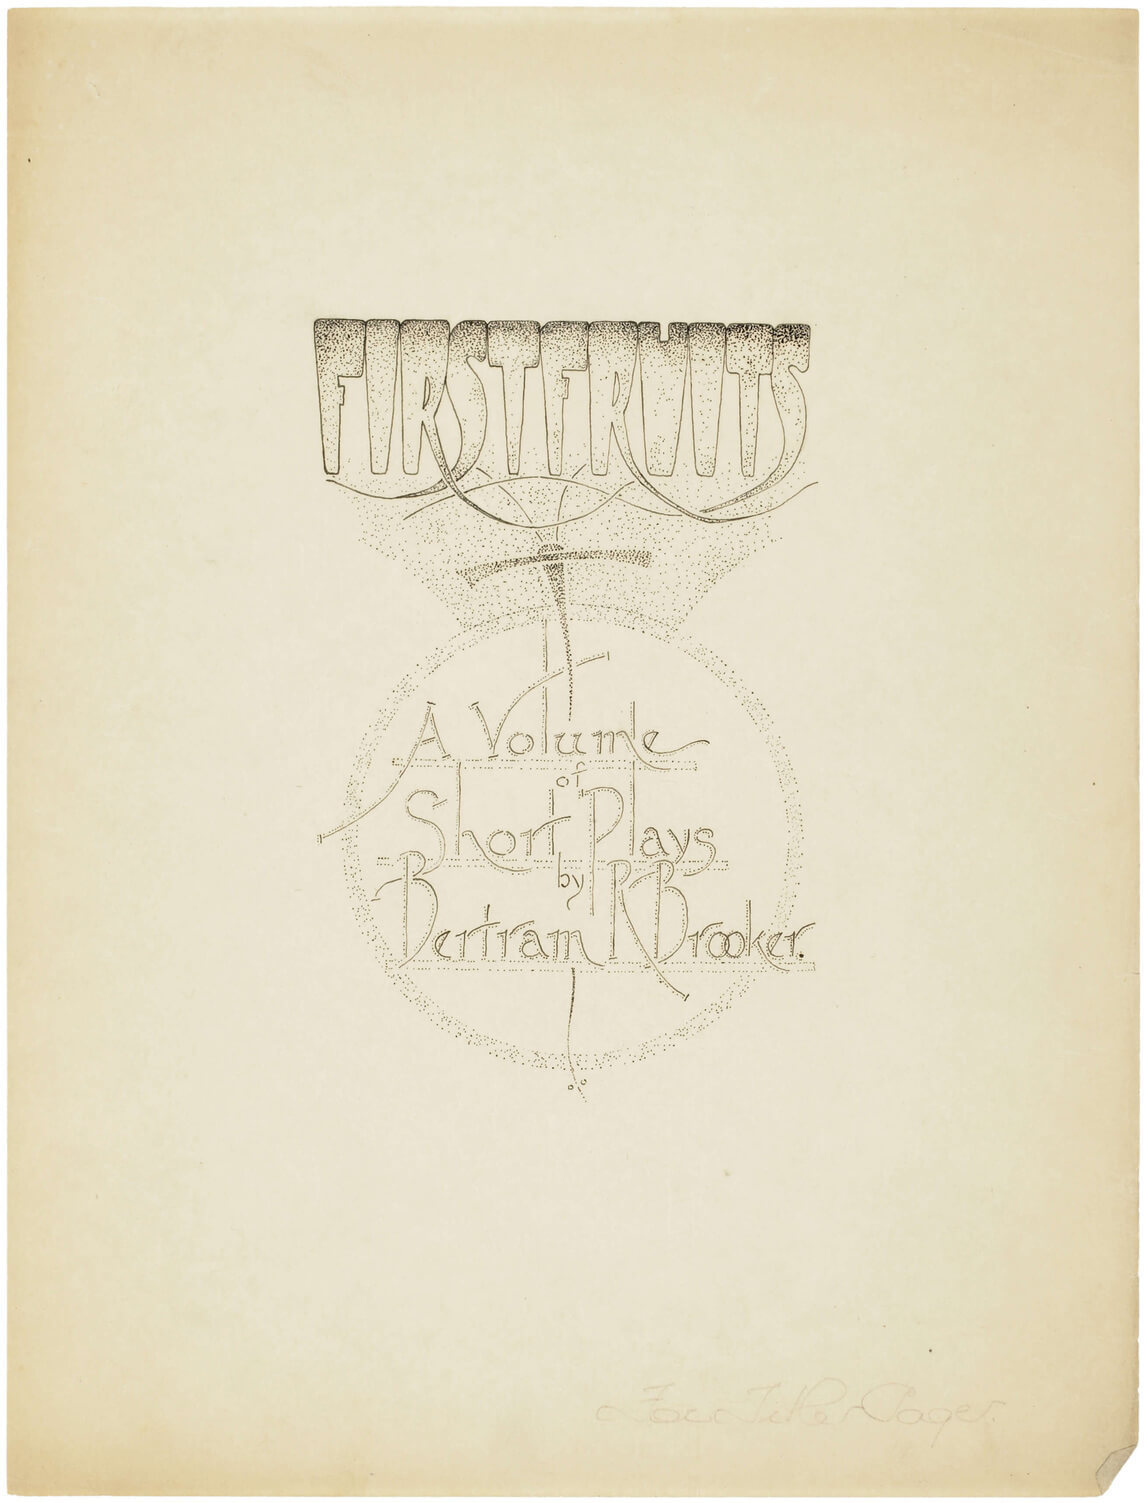 Art Canada Institute, Bertram Brooker, Cover illustration for “First Fruits: A Volume of Short Plays by Bertram R. Brooker,” c.1913–15